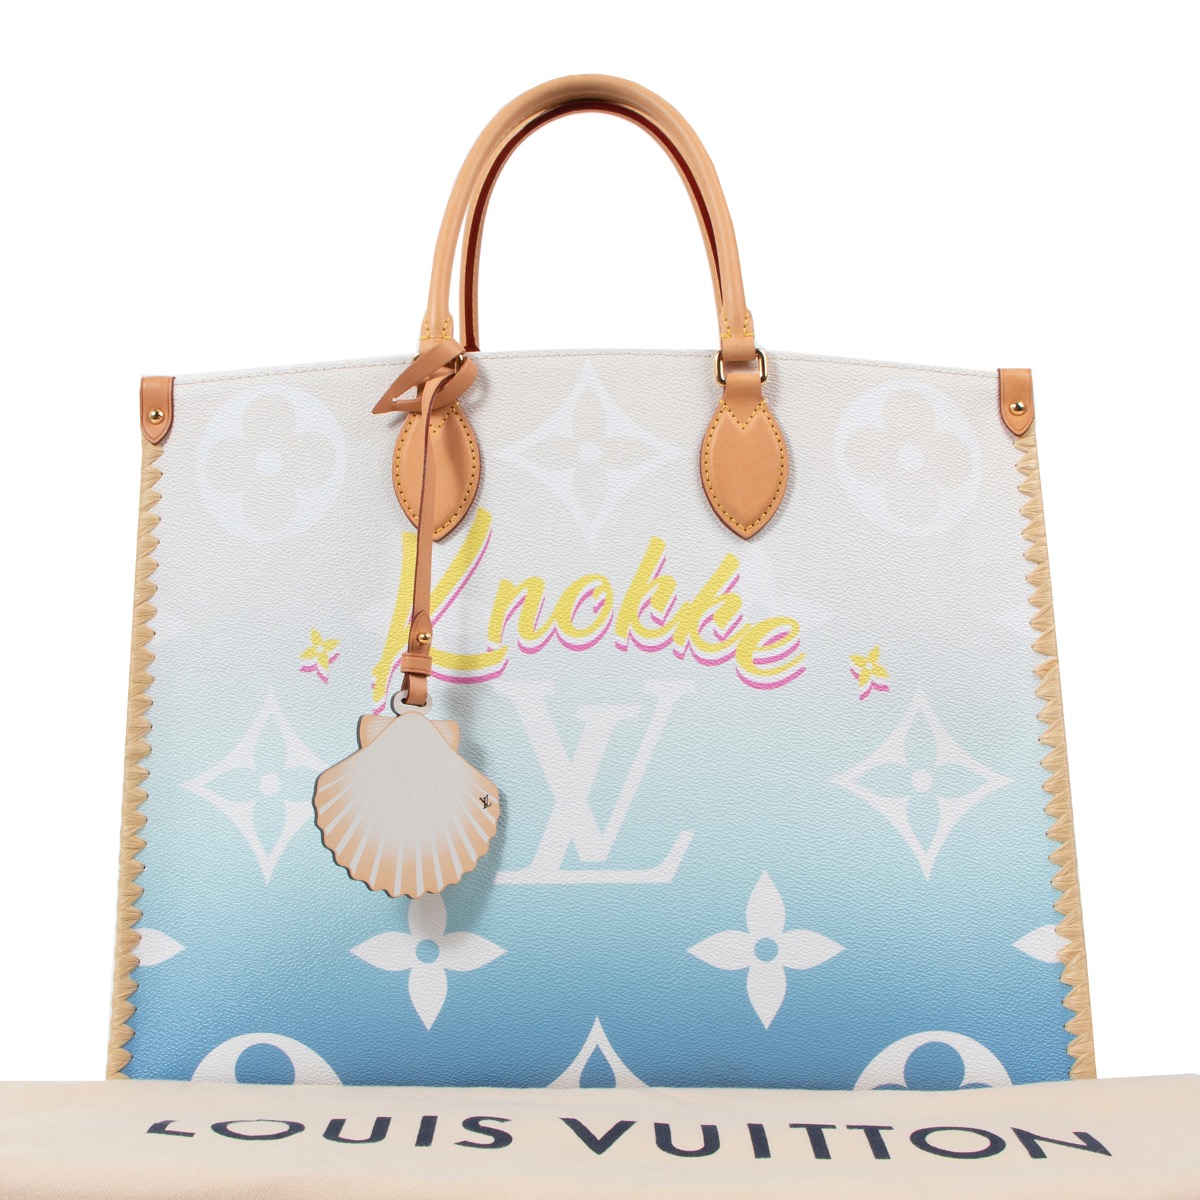 Dé zomertas: Louis Vuitton brengt exclusieve ONTHEGO Knokke tote uit